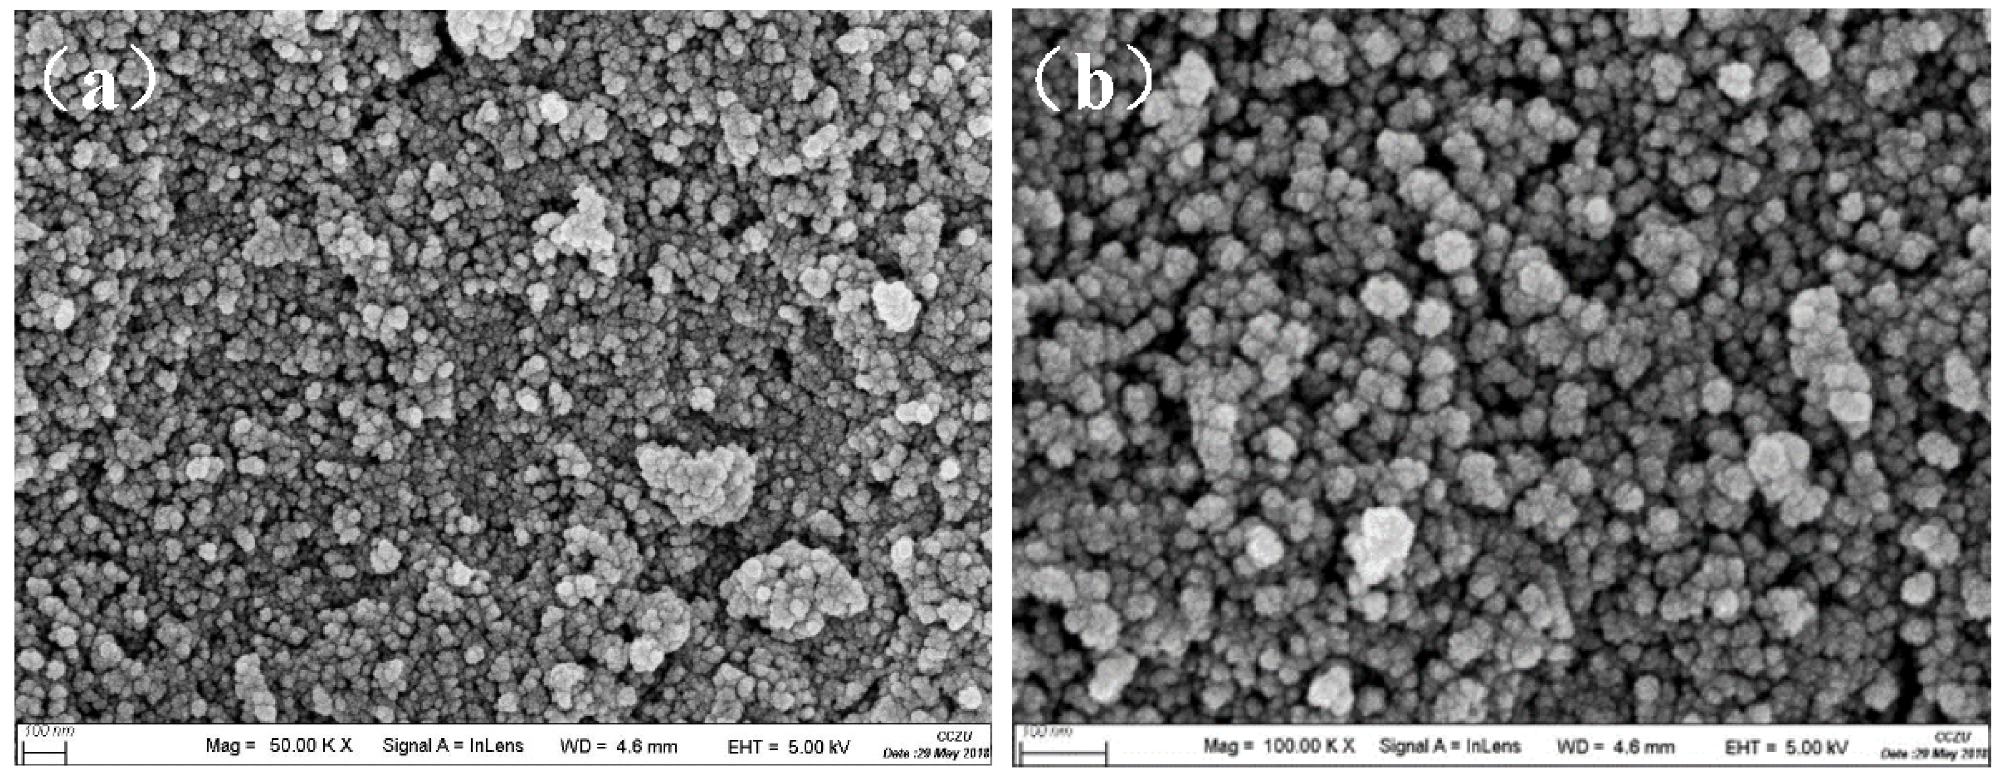 SEM image of silica aerogel powders at (a) 50.00 KX and (b) 100.00 KX magnification.